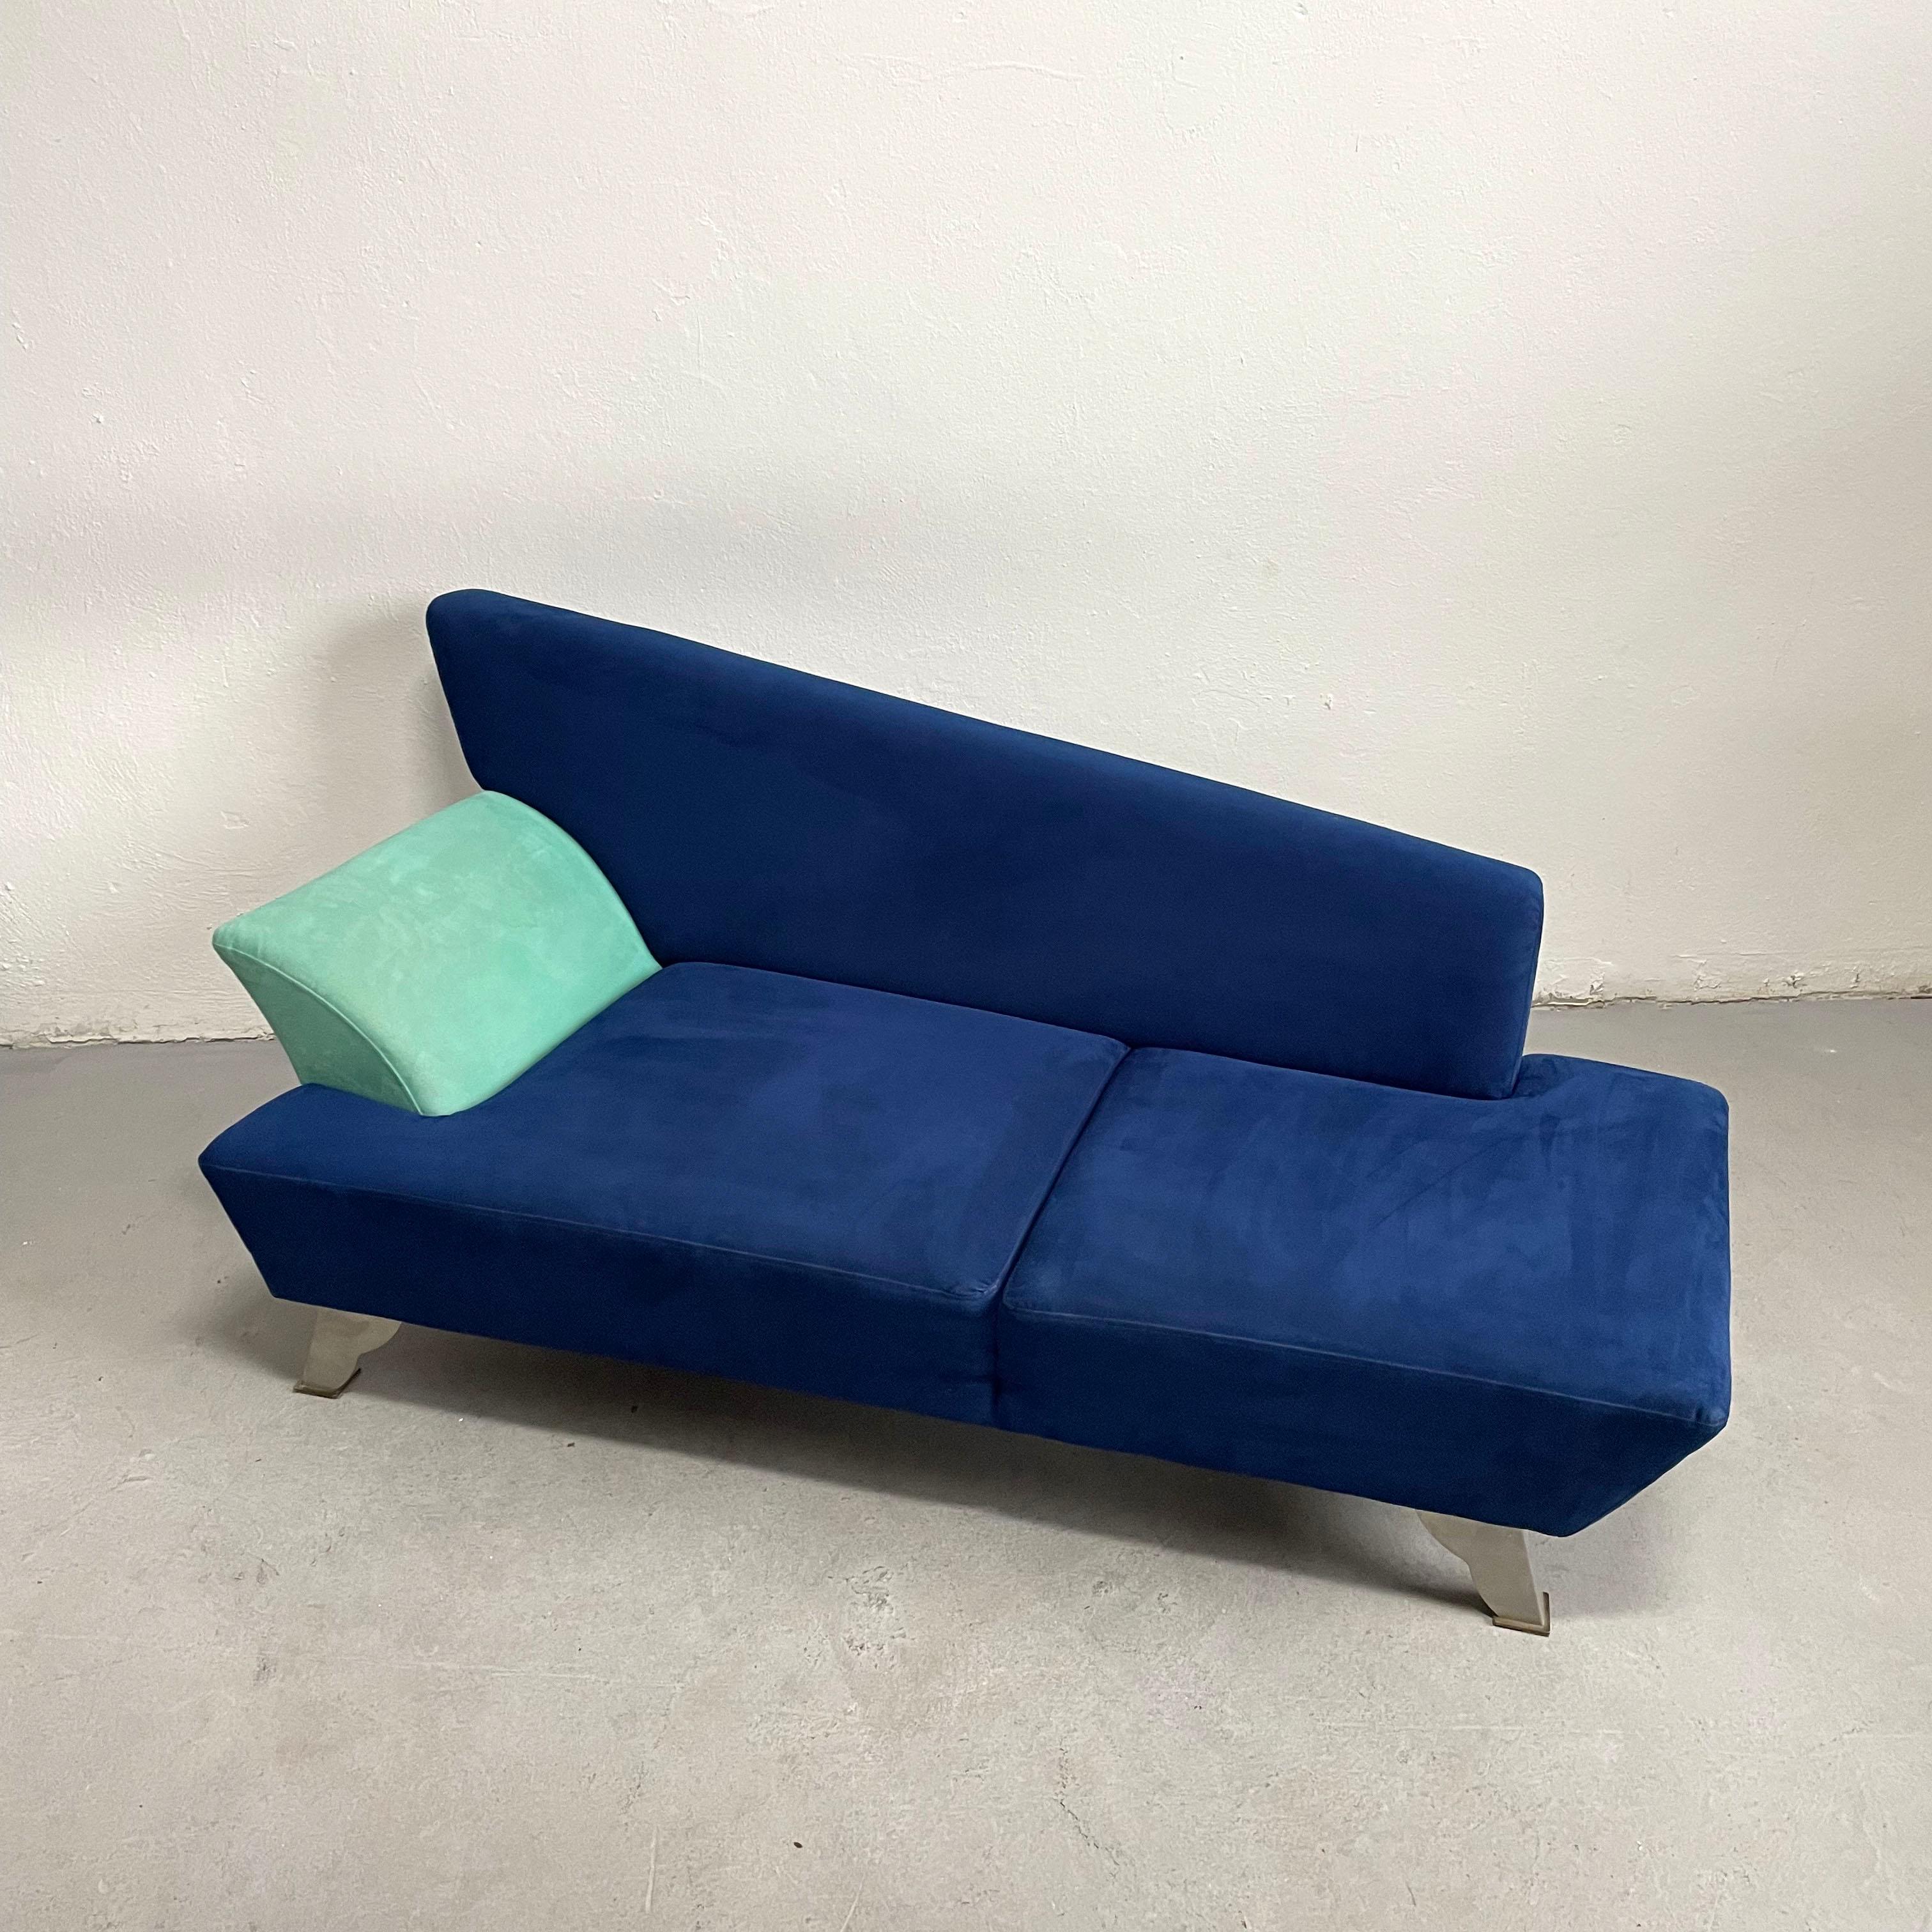 Memphis Style Italian 2-Seat Sofa in Blue Alcantara Fabric, Postmodern, 1980s For Sale 4